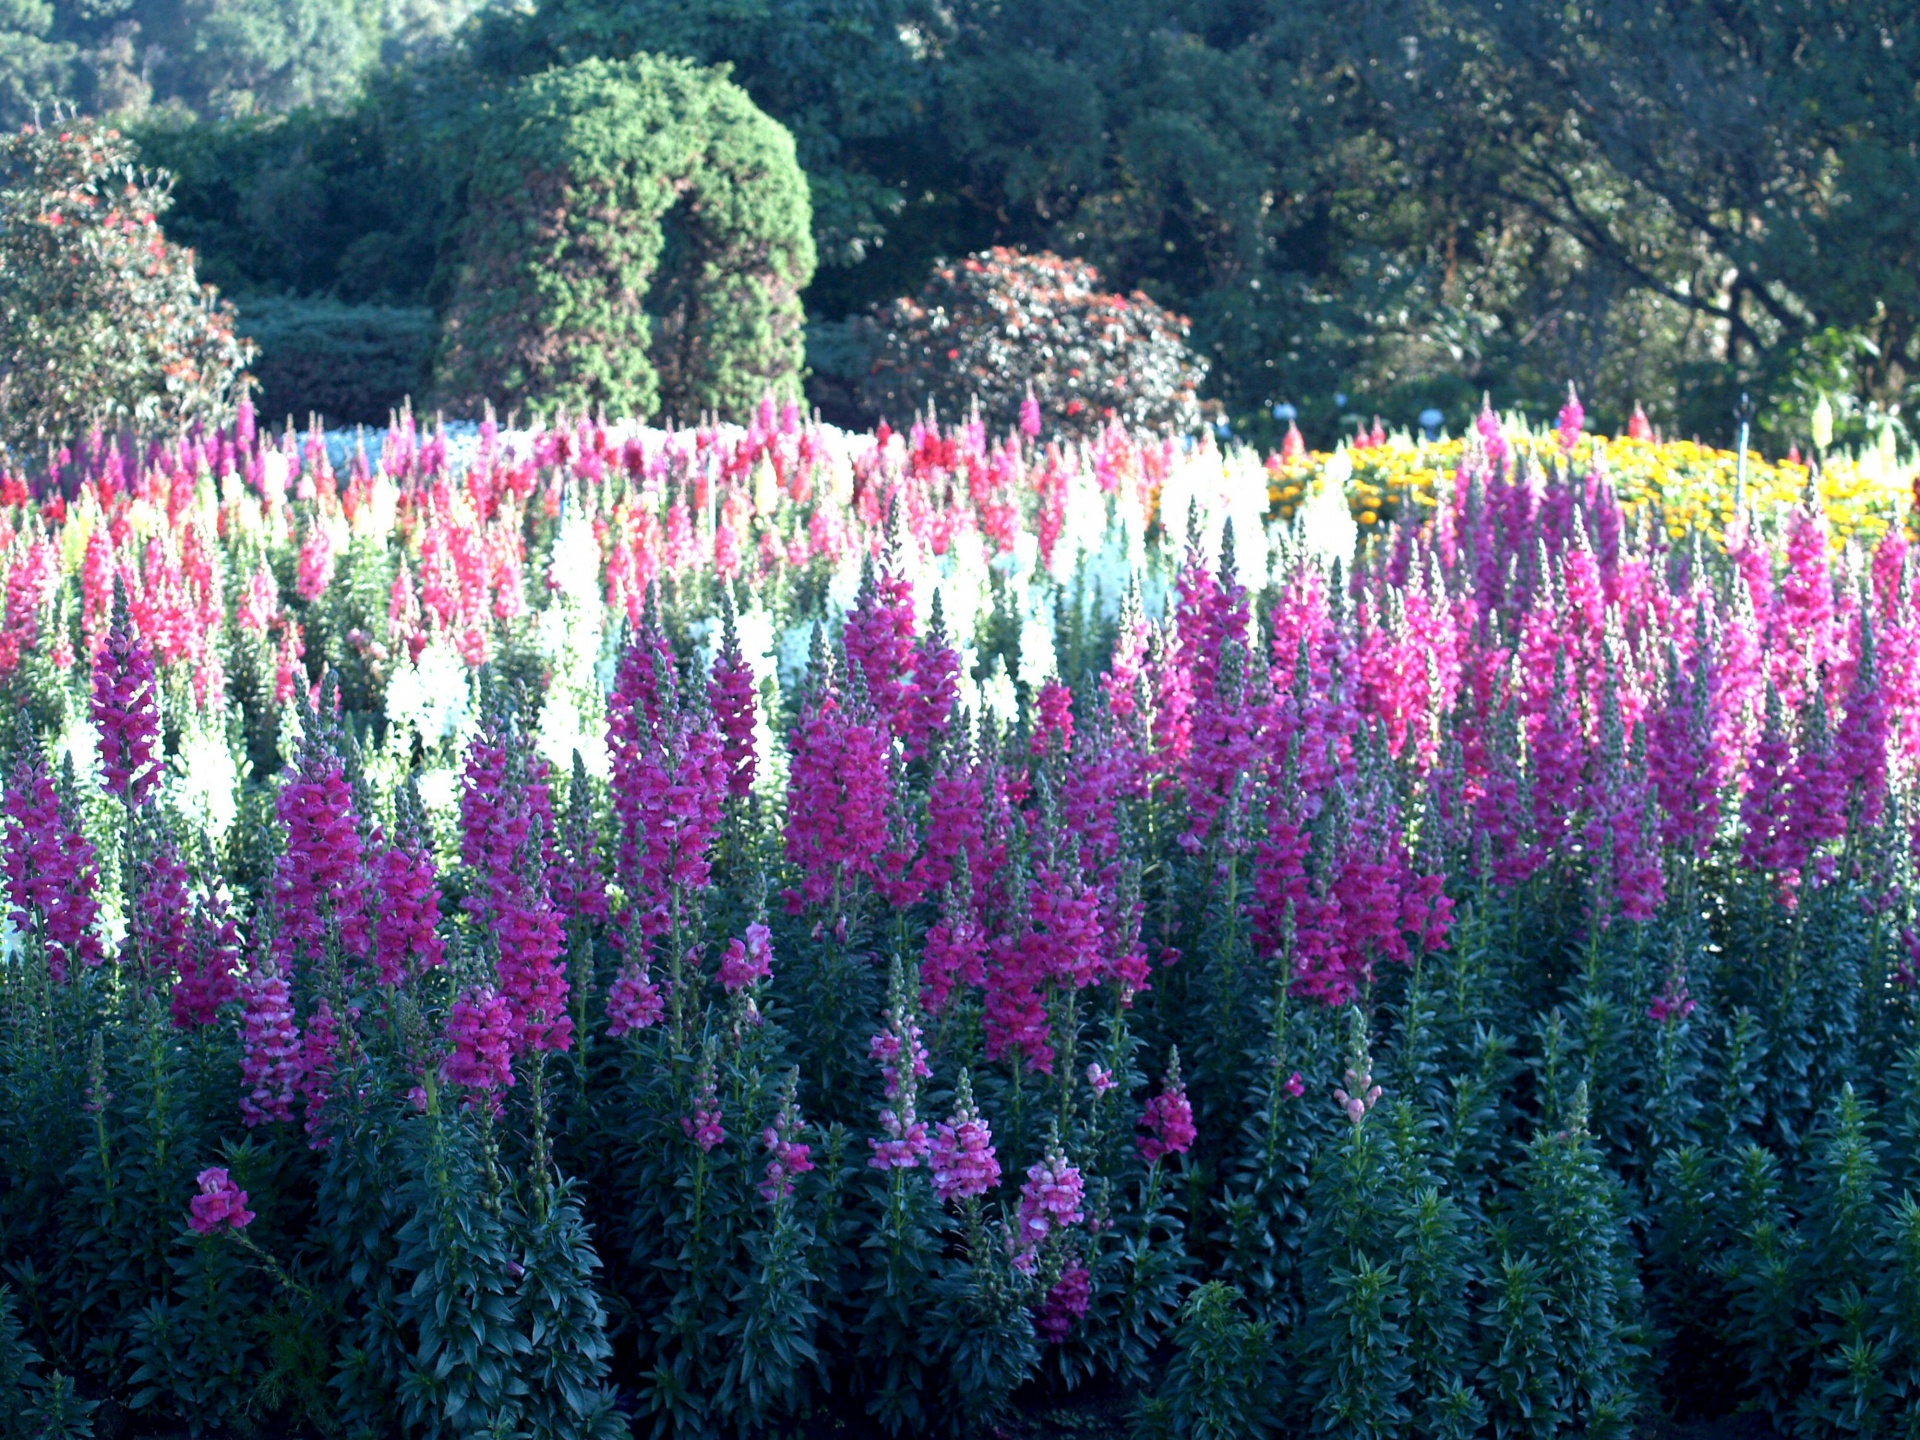 Jardín de flores en la montaña Doi Intha